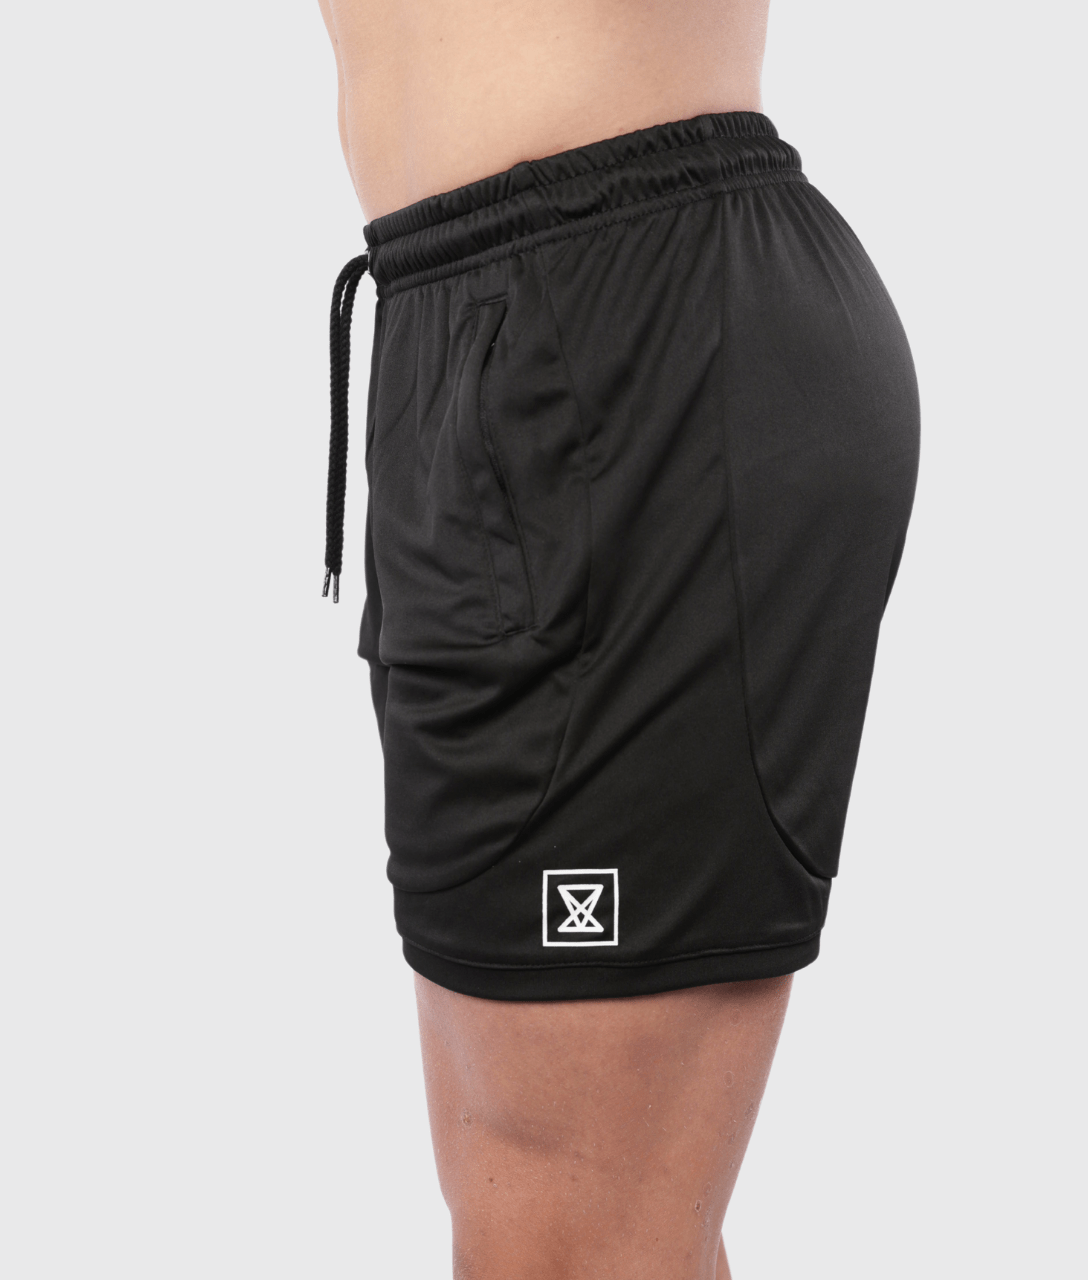 TRAINING Zip Shorts [Black] - VXS GYM WEAR